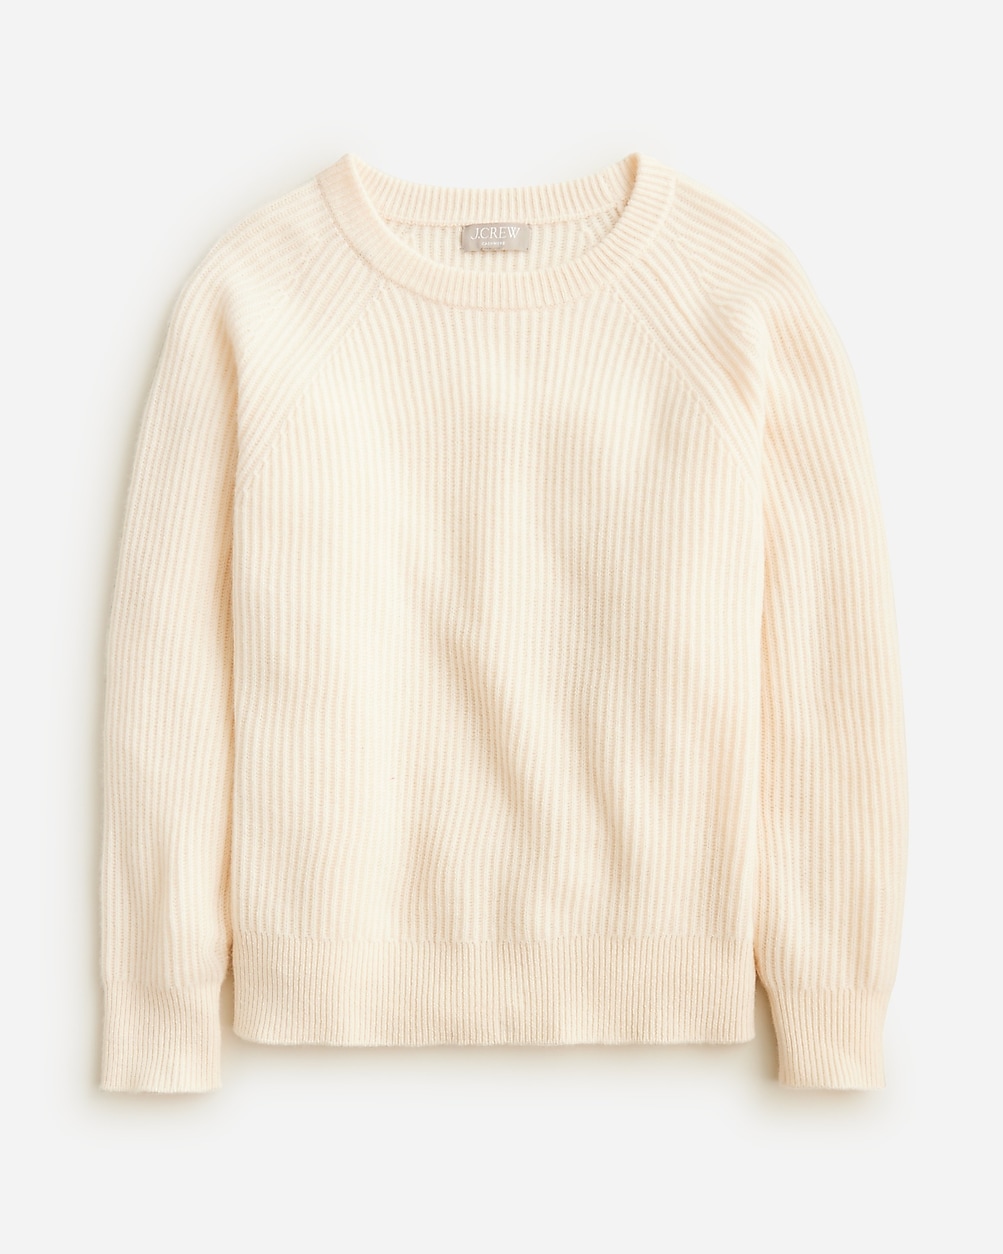 Sandstone Brown Oversized Crewneck Sweatshirt- SMALL ONLY – J Rose